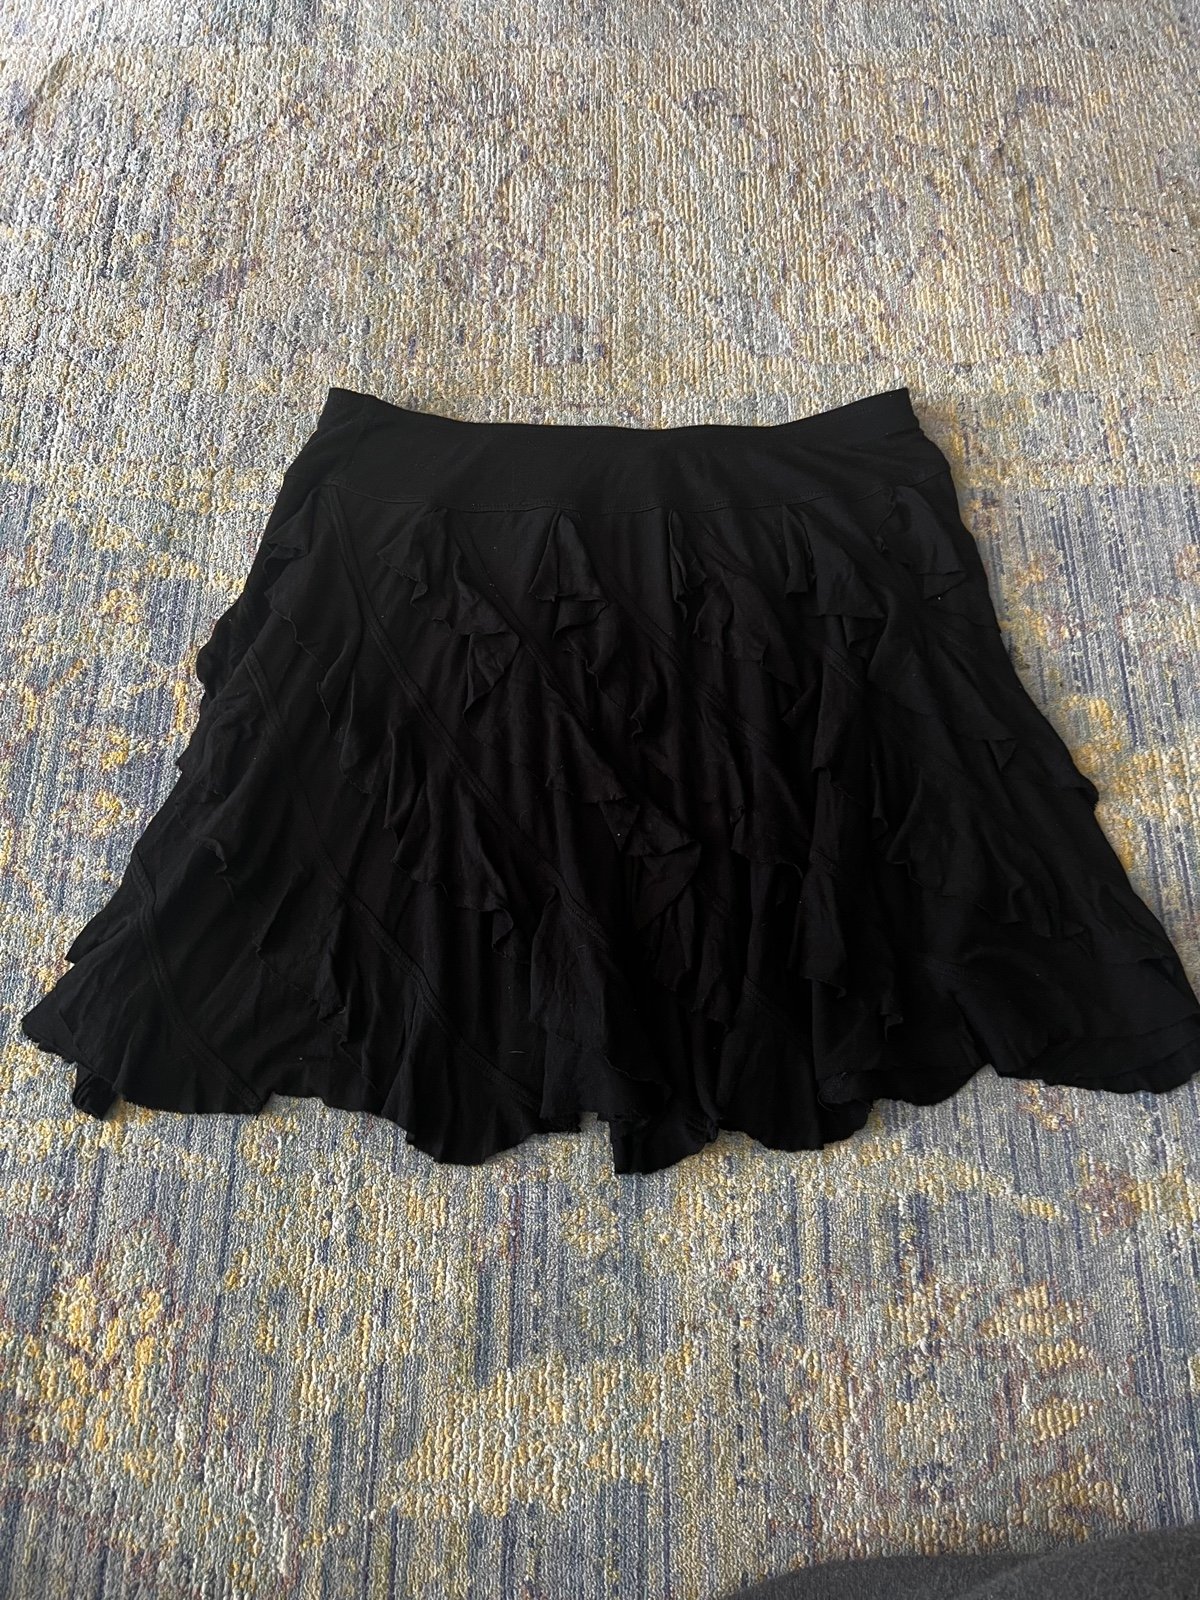 Amazing INC International Concepts Ruffle Skirt Size Large LP1Ml8zIk hot sale